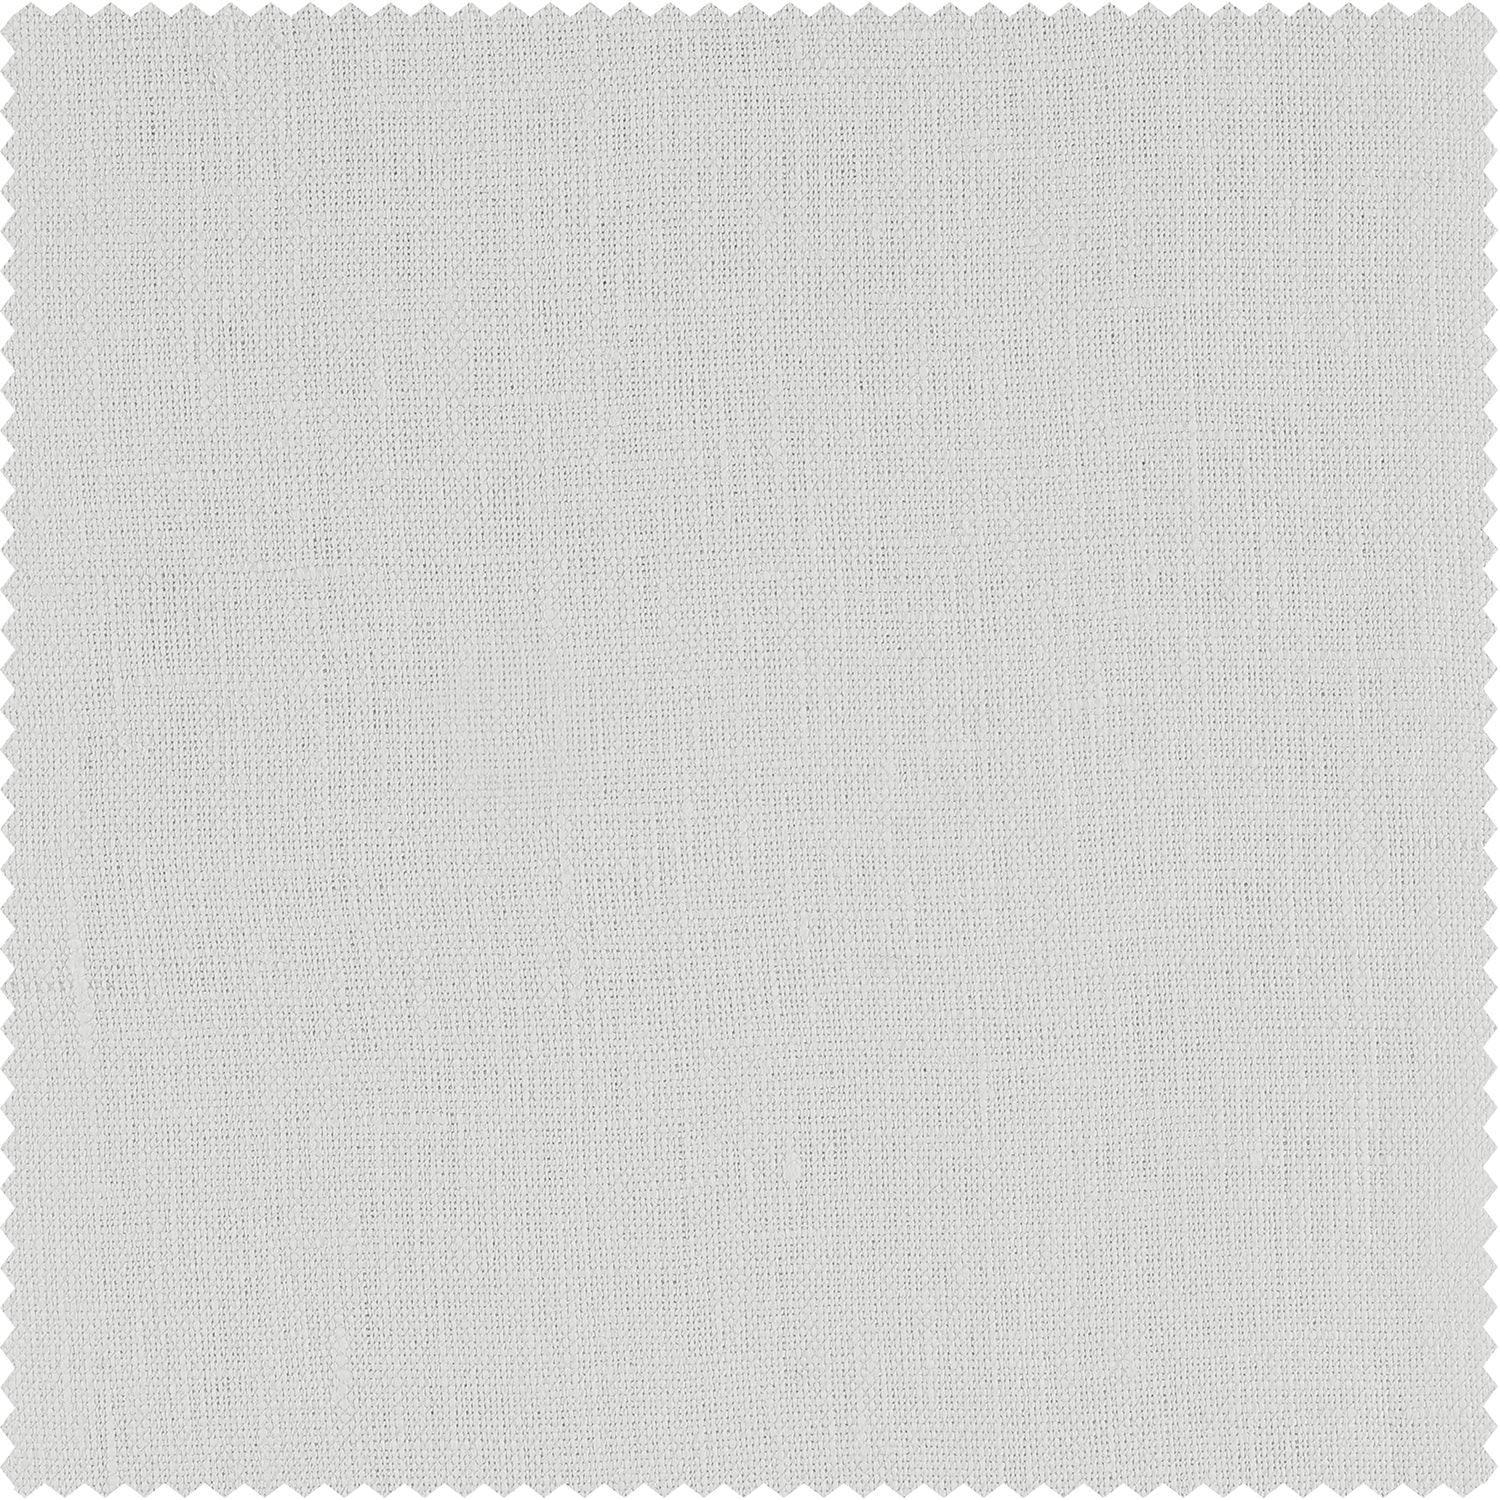 Crisp White French Pleat French Linen Room Darkening Curtain